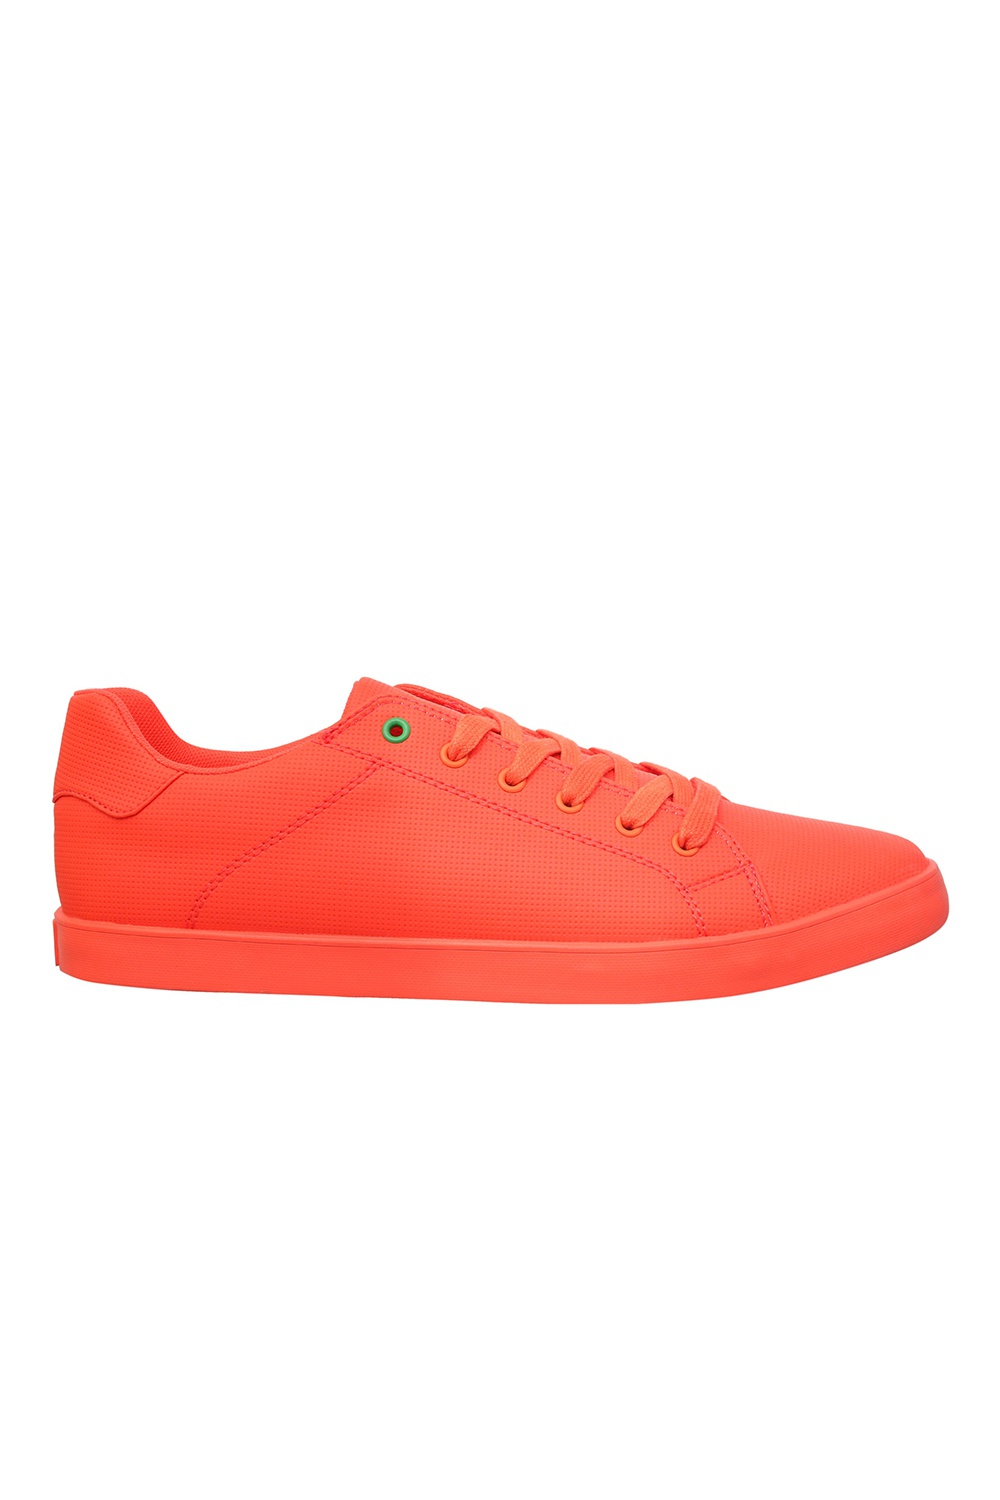 ucb orange sneakers